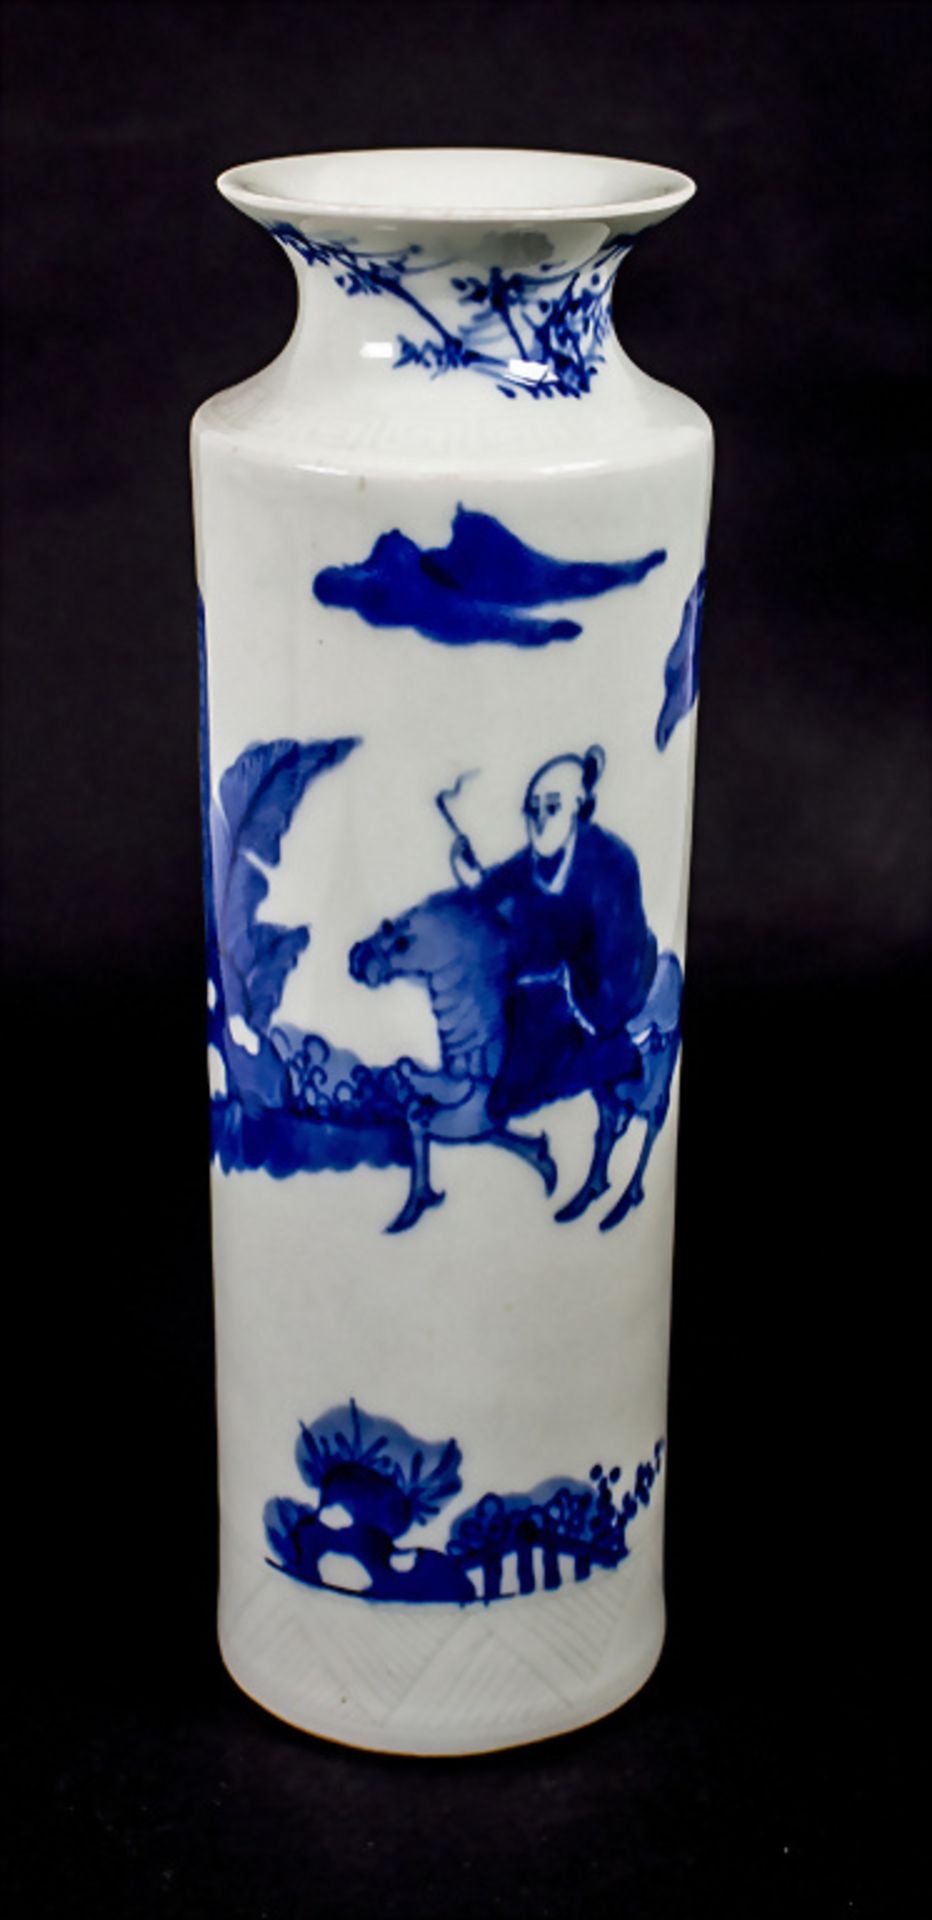 Ziervase / A decorative vase, China, Qing Dynastie (1644-1911)